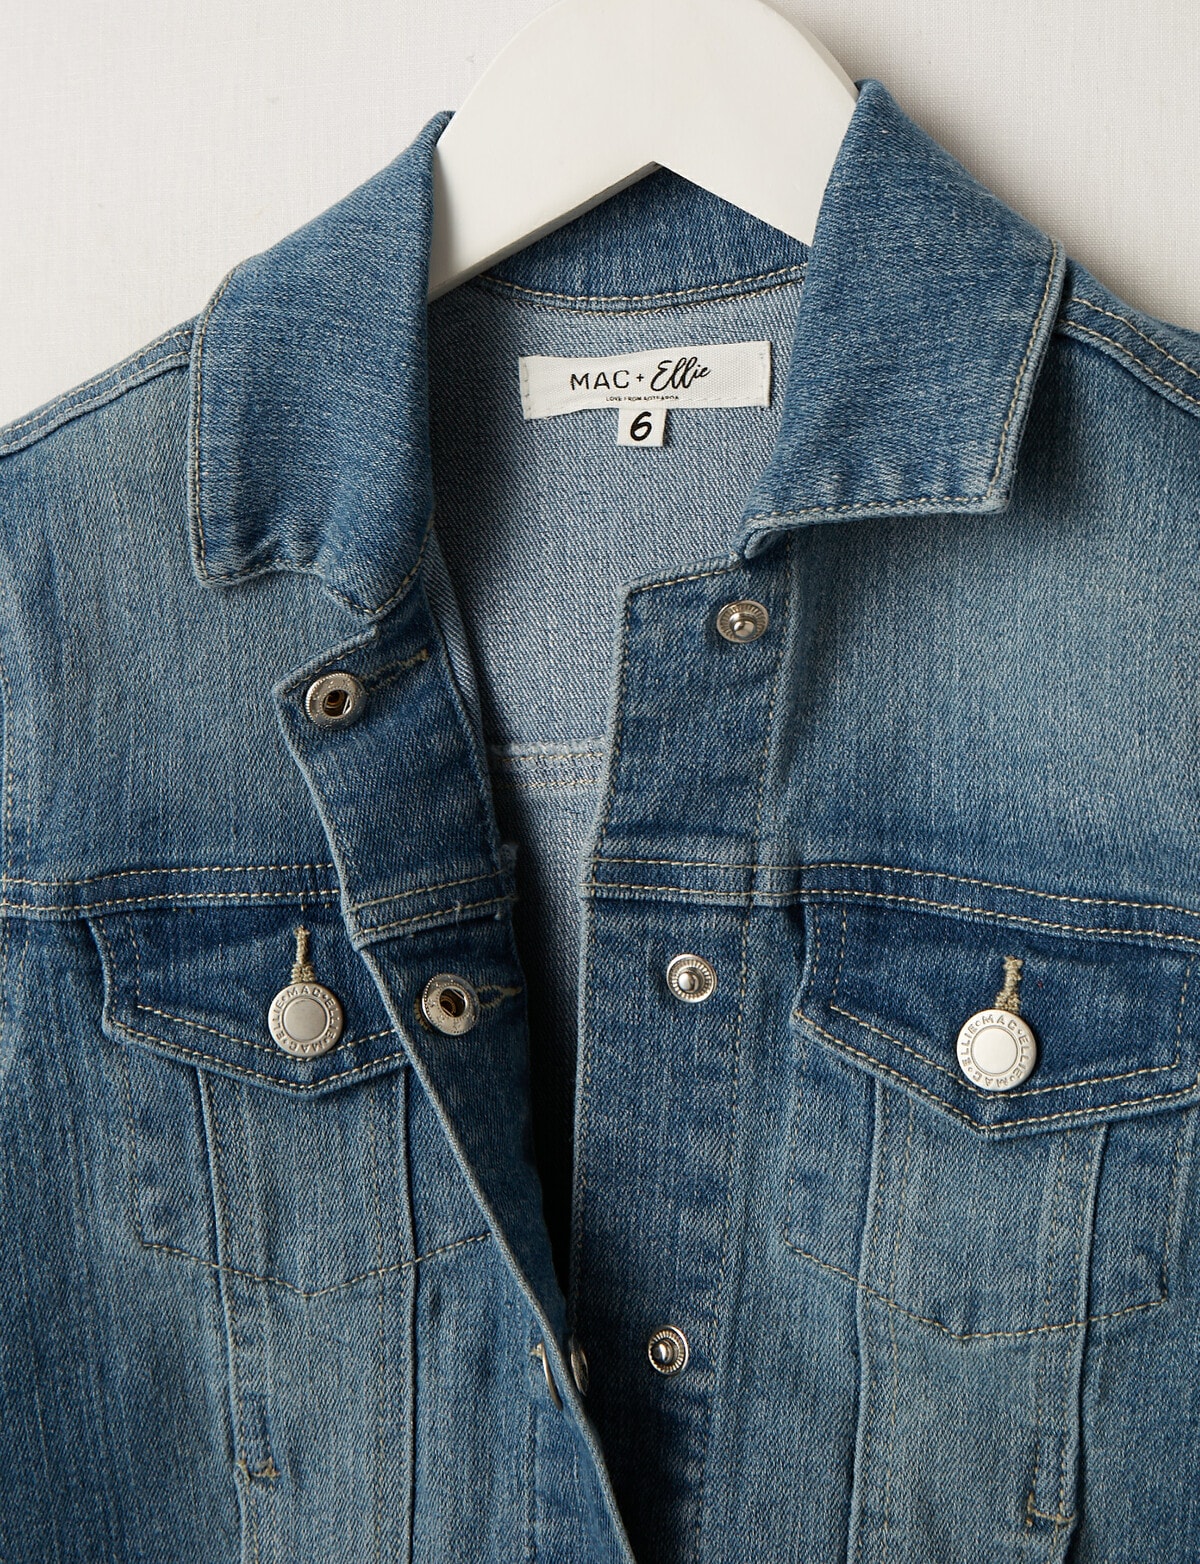 Mac & Ellie Stretch Denim Jacket, Mid Blue - Hoodies & Jackets